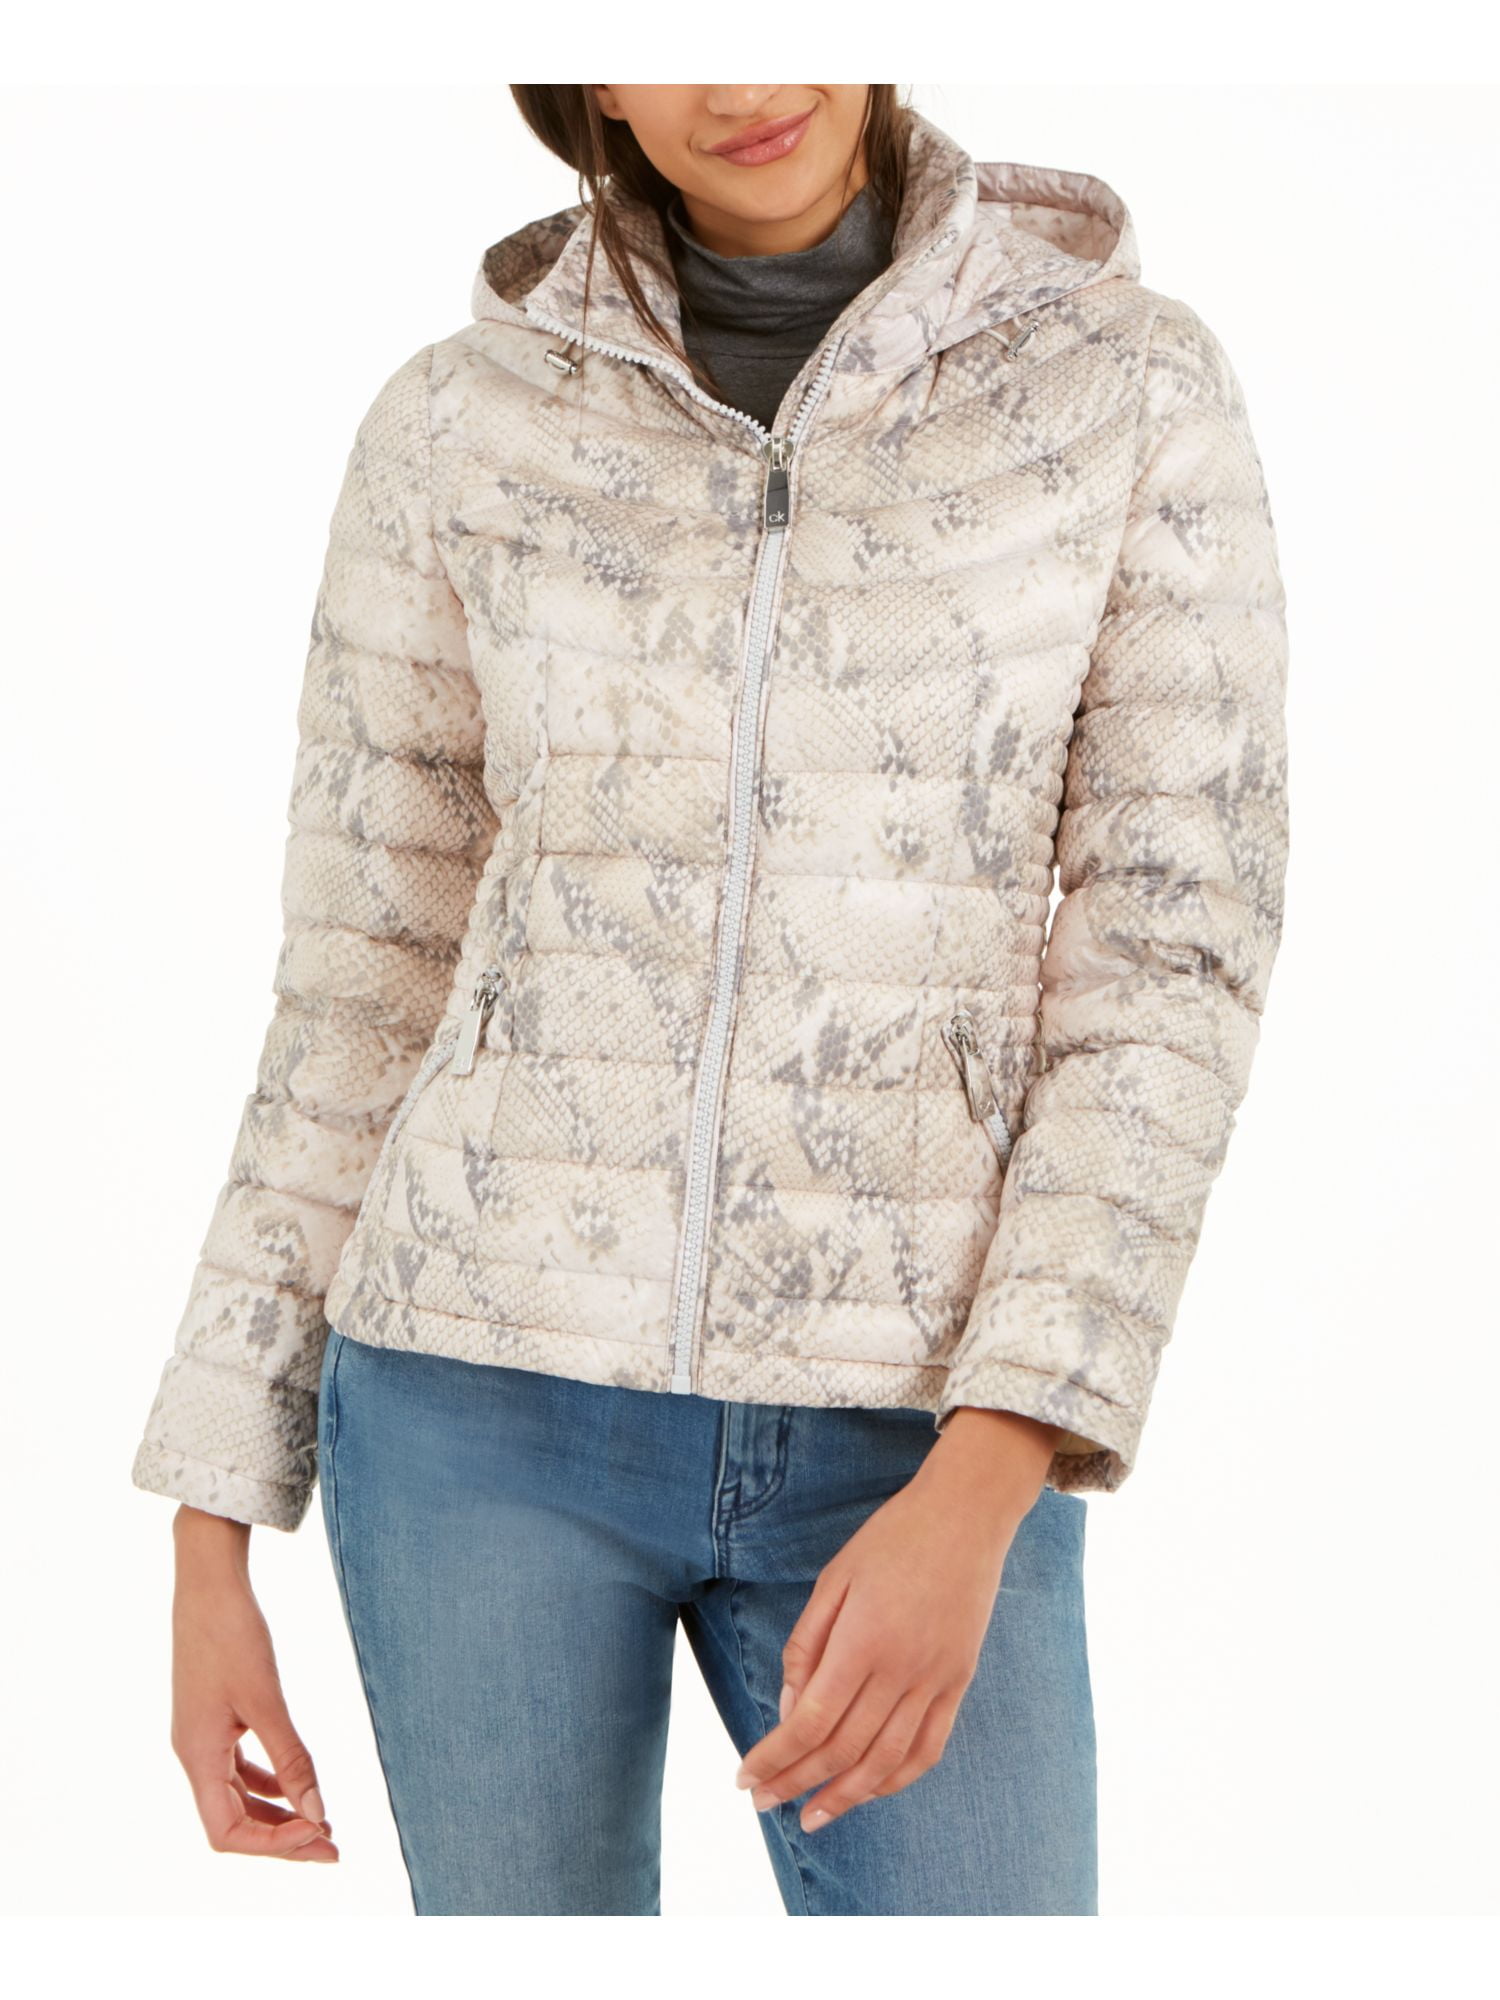 syndroom postzegel handel CALVIN KLEIN Womens Beige Pocketed Zippered Hooded Puffer Winter Jacket Coat  XS - Walmart.com